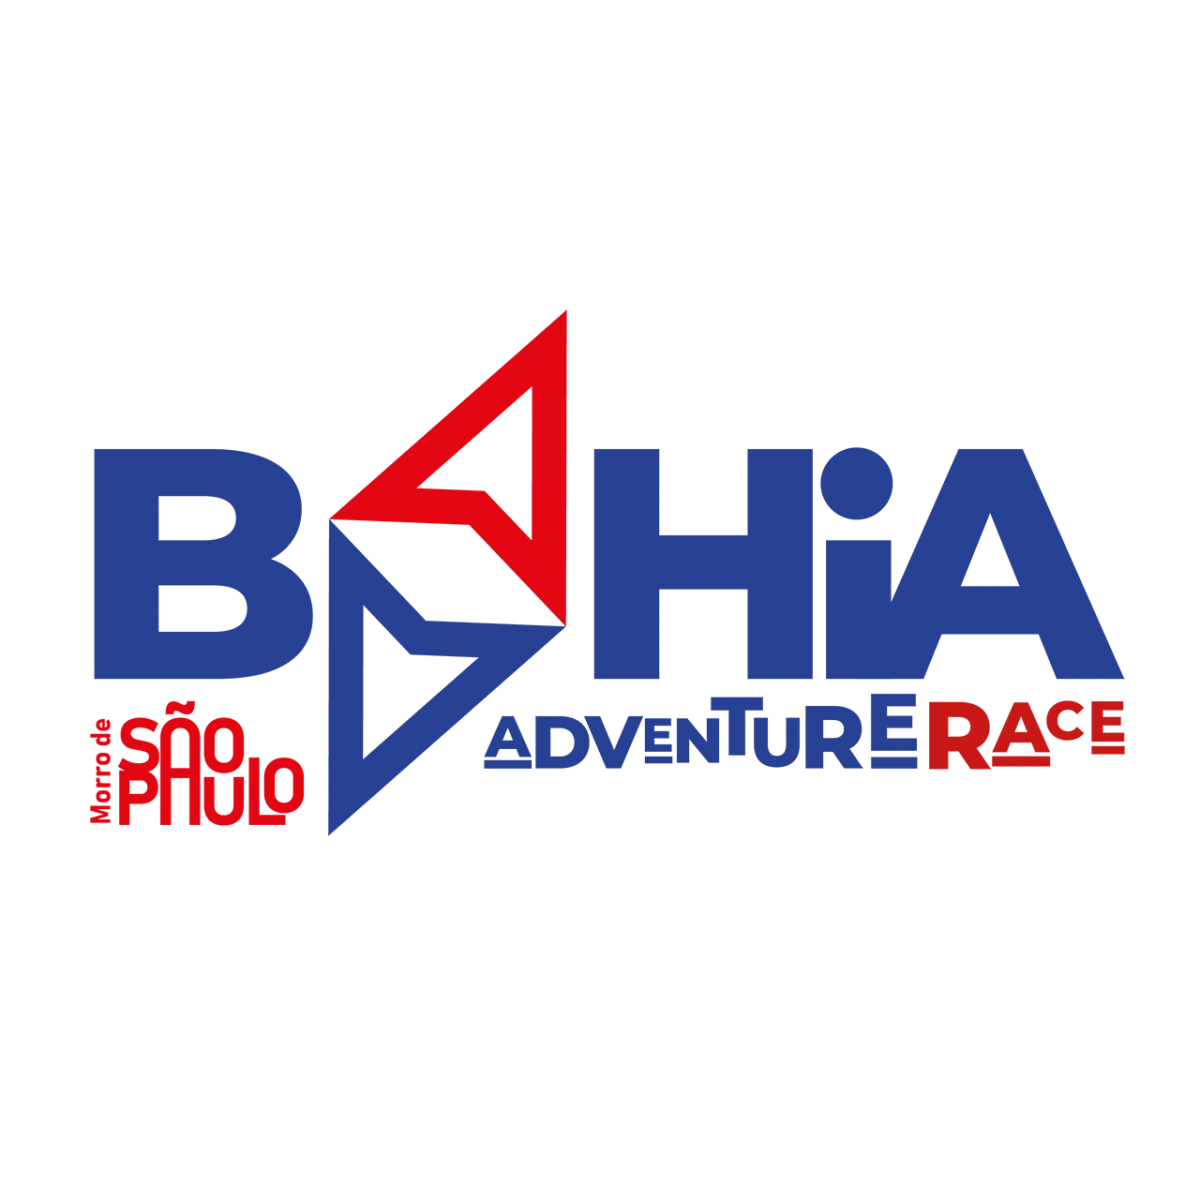 Bahia Adventure Race 2022